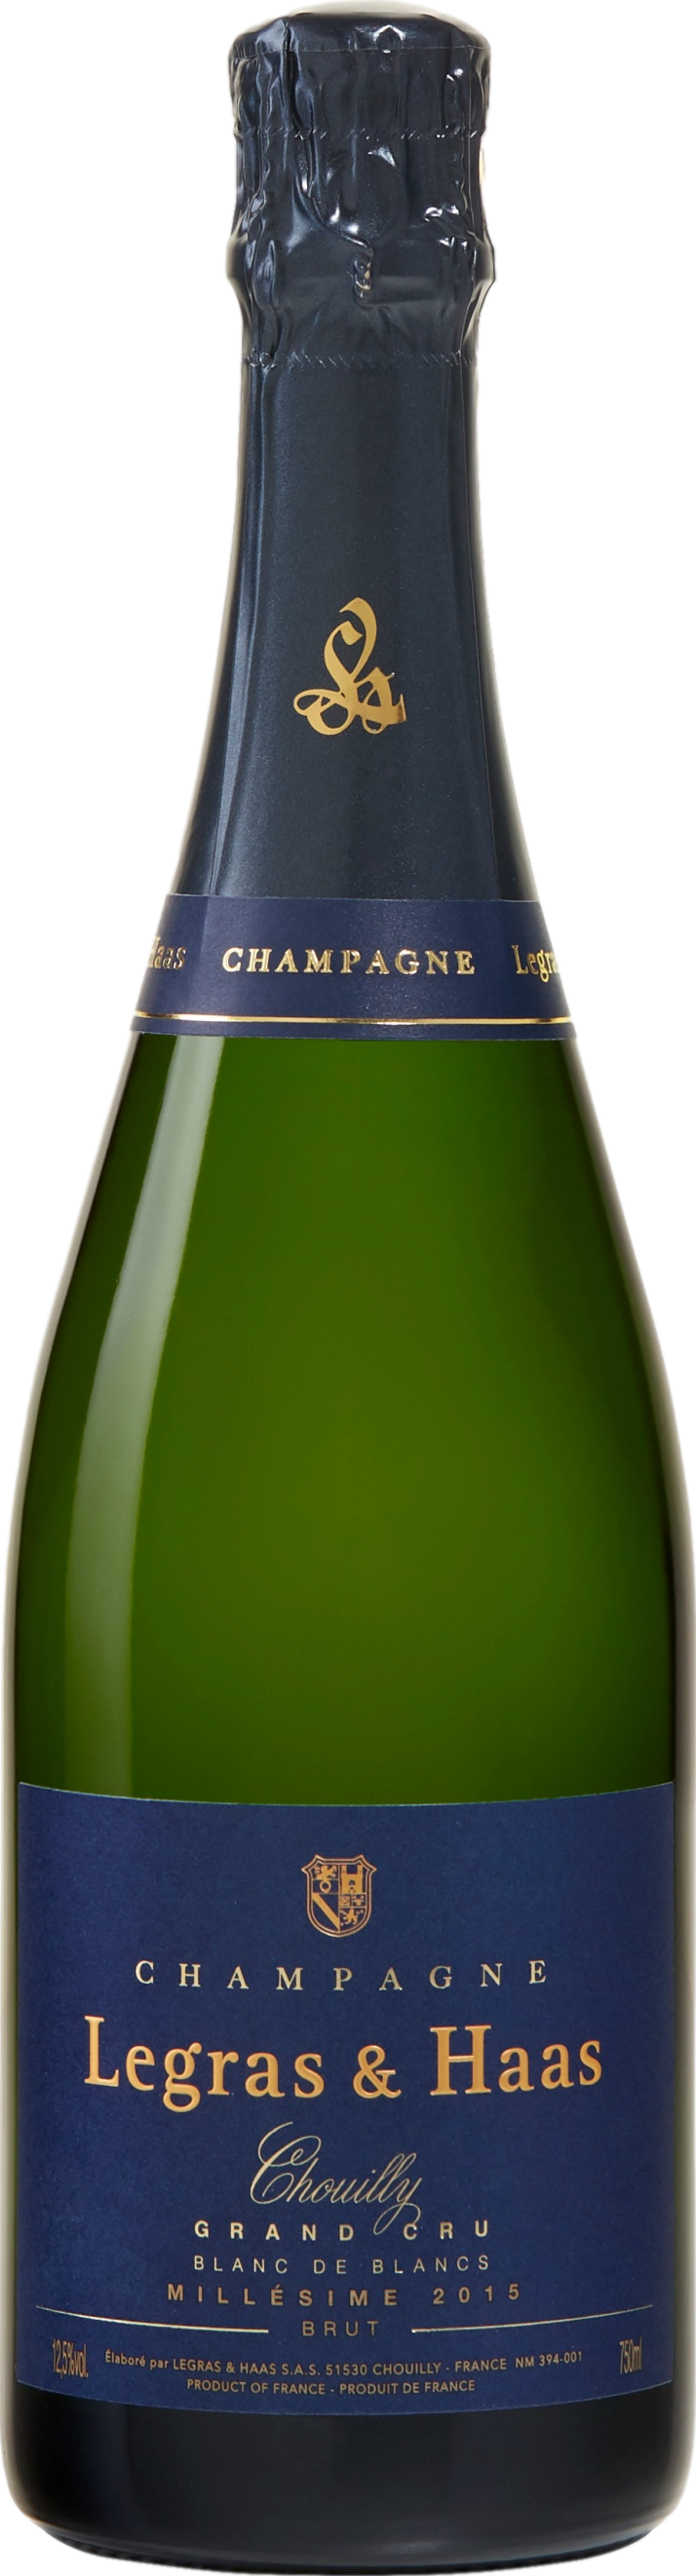 Champagne Legras et Haas Blanc de Blancs Grand Cru 2015